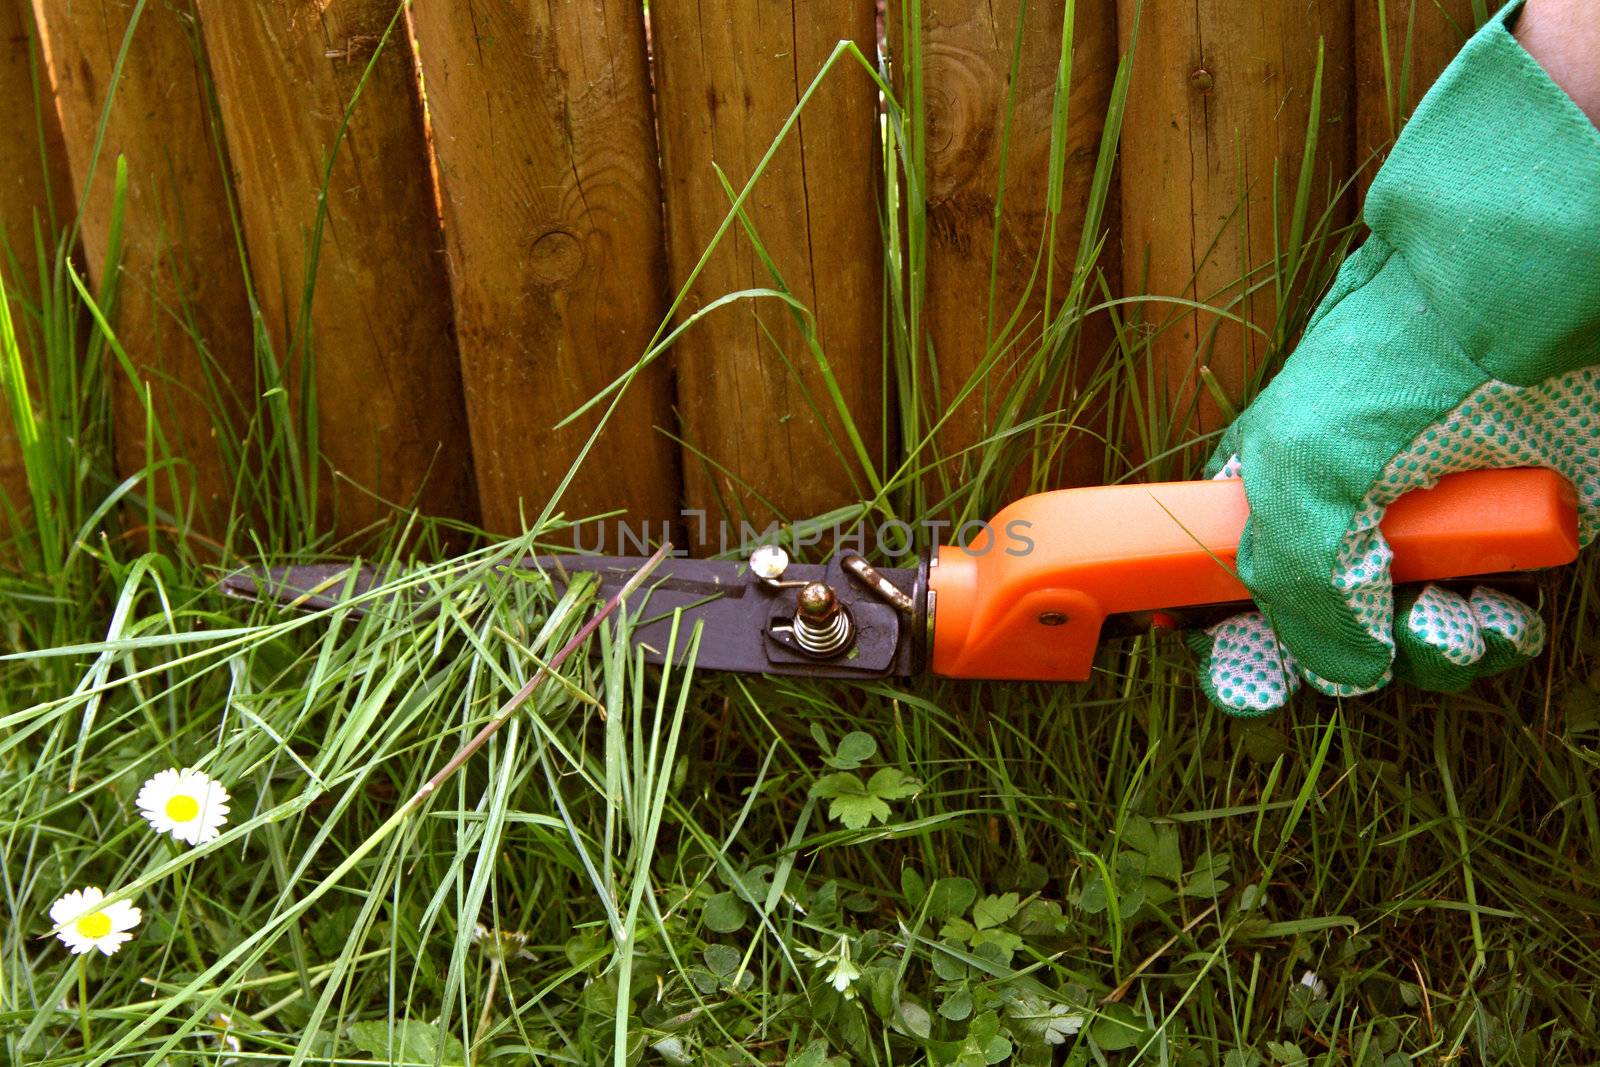 Exact gardening -  trimming grass with scissors
